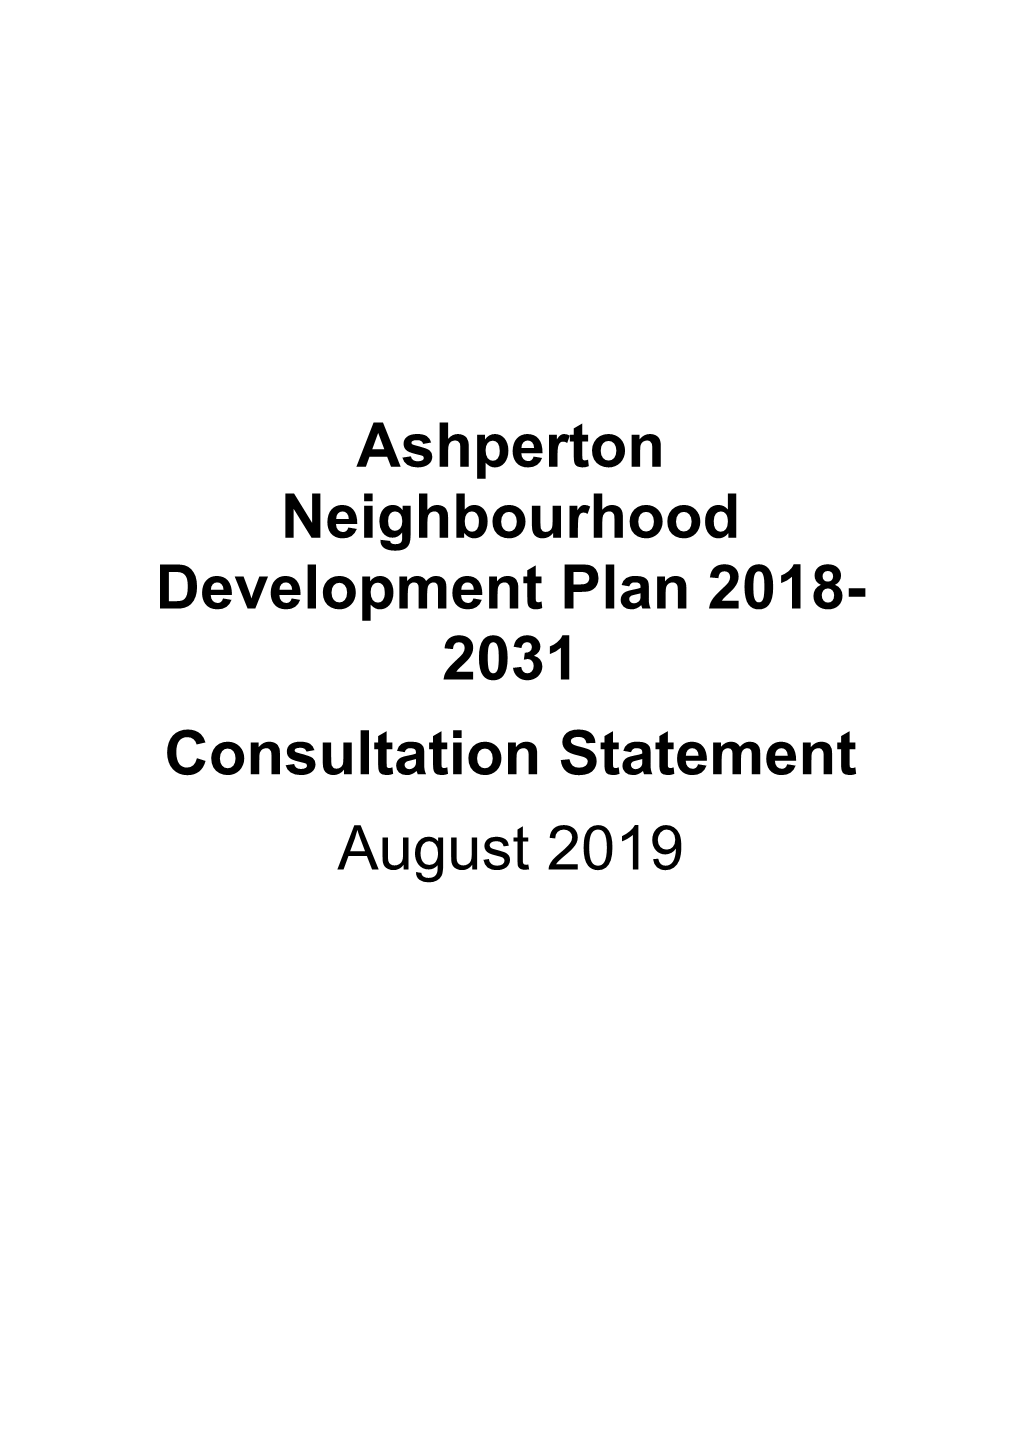 Ashperton Consultation Statement August 2019